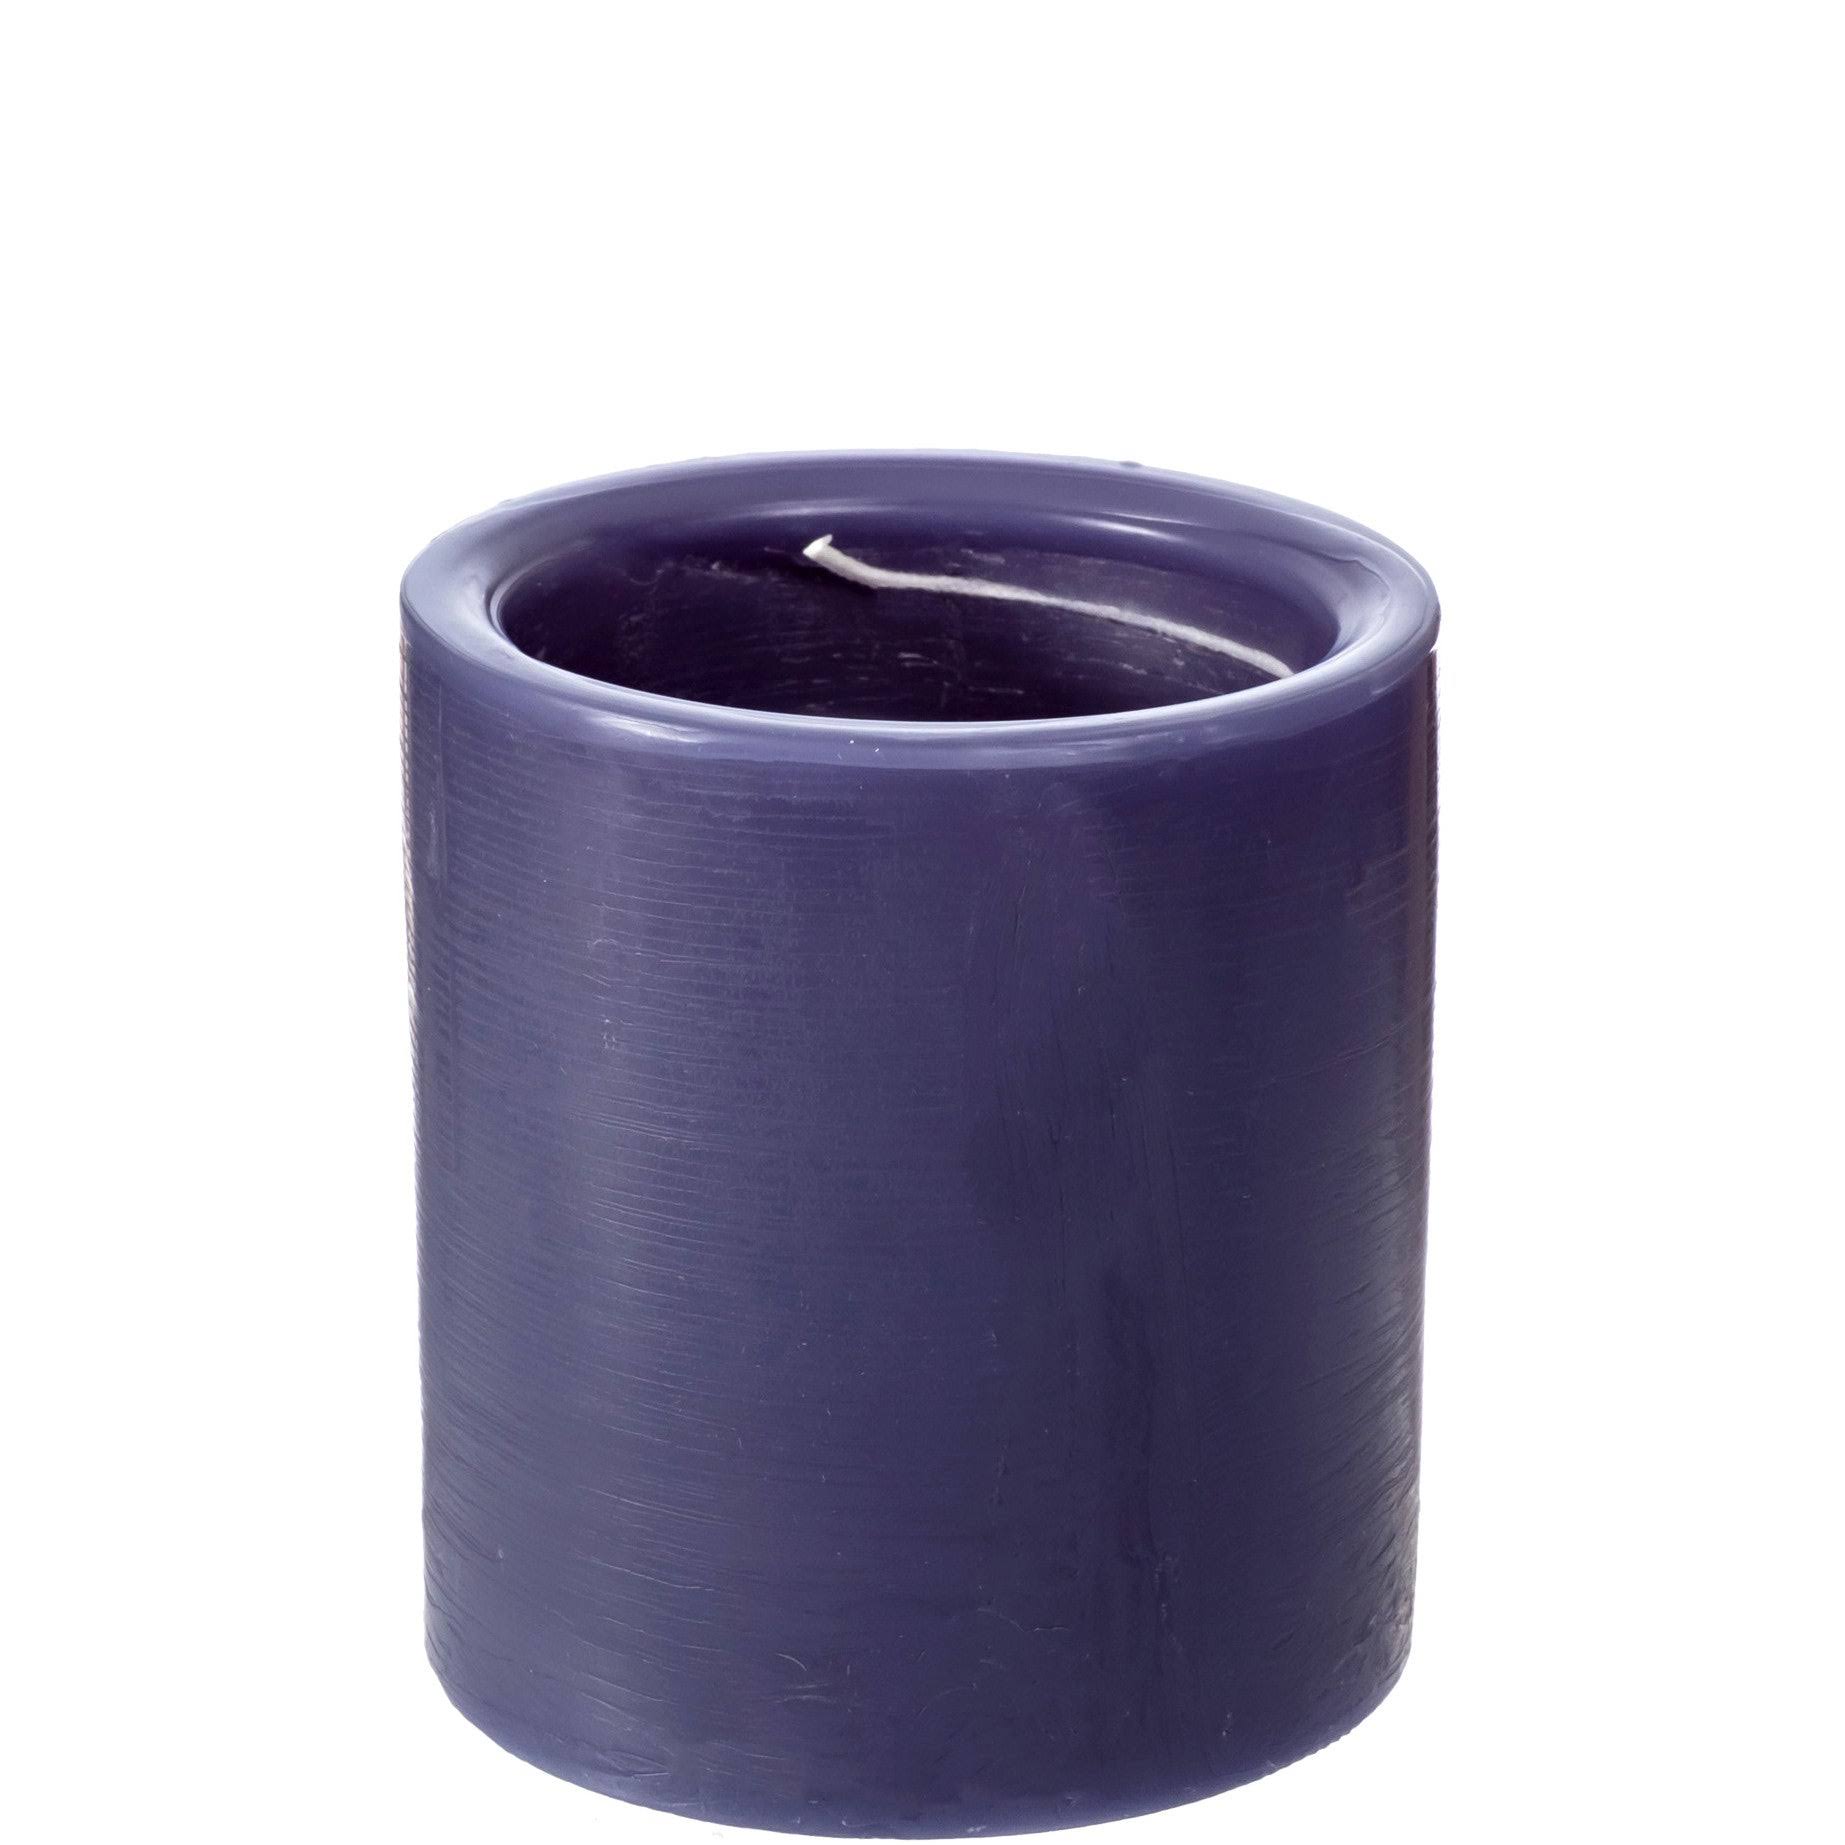 Spiral Light Candles - Medium - Sweet Violet + Bamboo